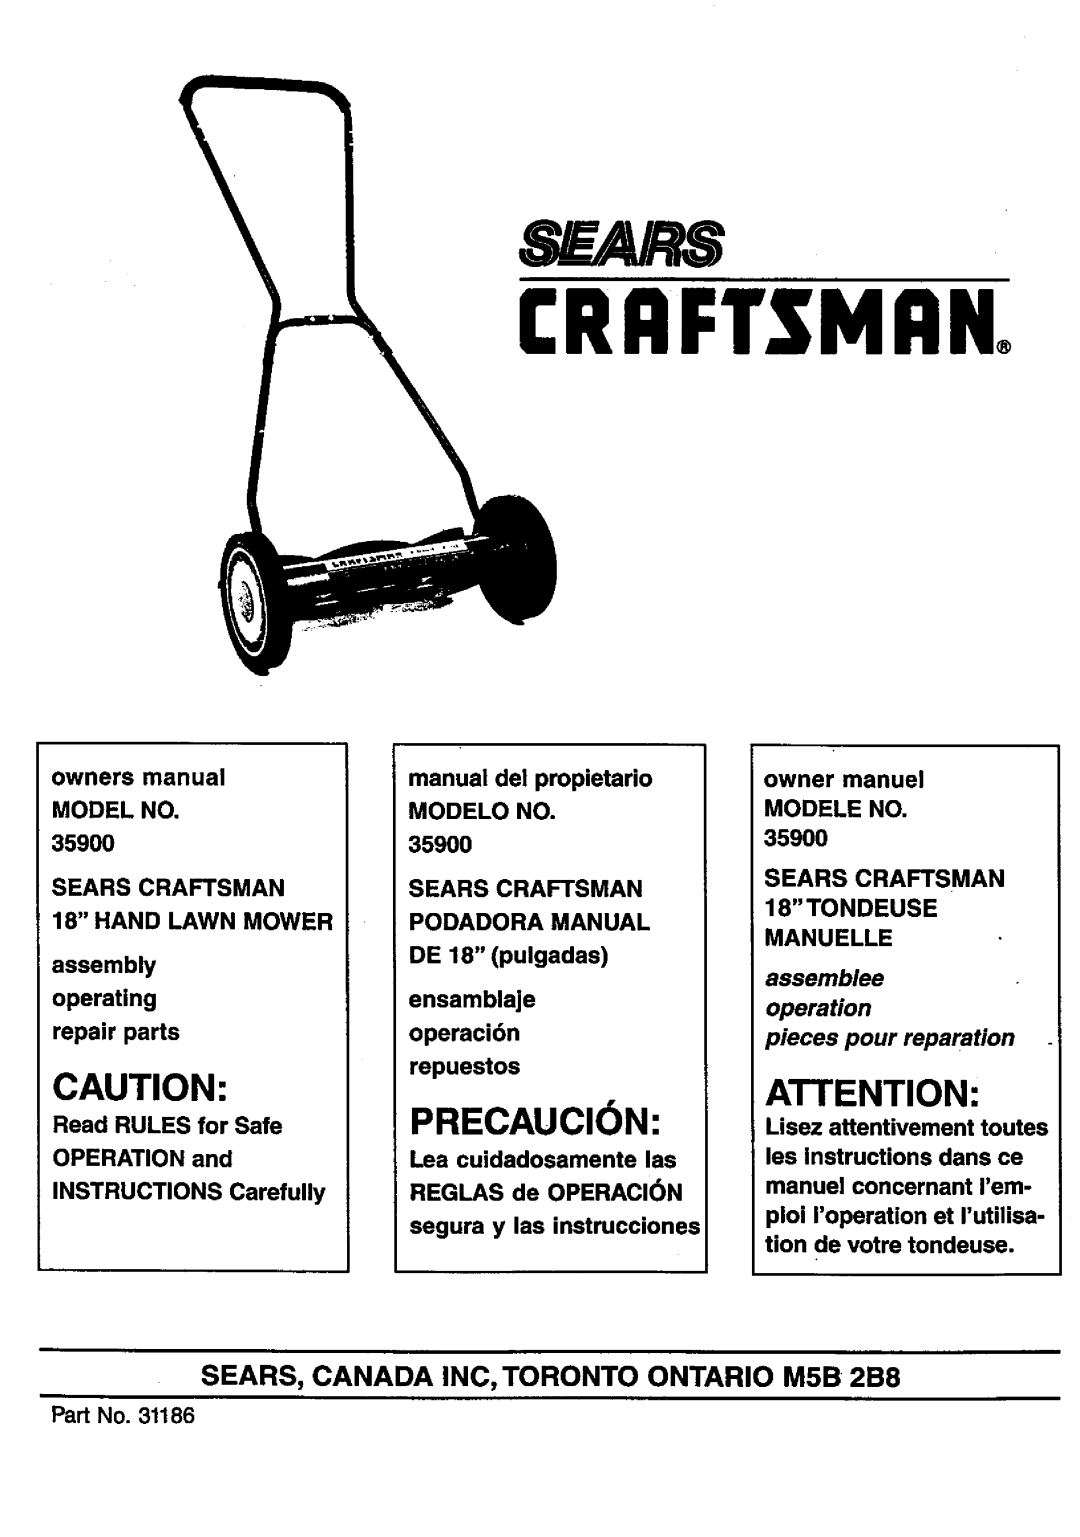 Craftsman 35900 owner manual Precaucion, SEARS, CANADA INC, TORONTO ONTARIO M5B 2B8, Sears Craftsman, 18TONDEUSE, Manuelle 